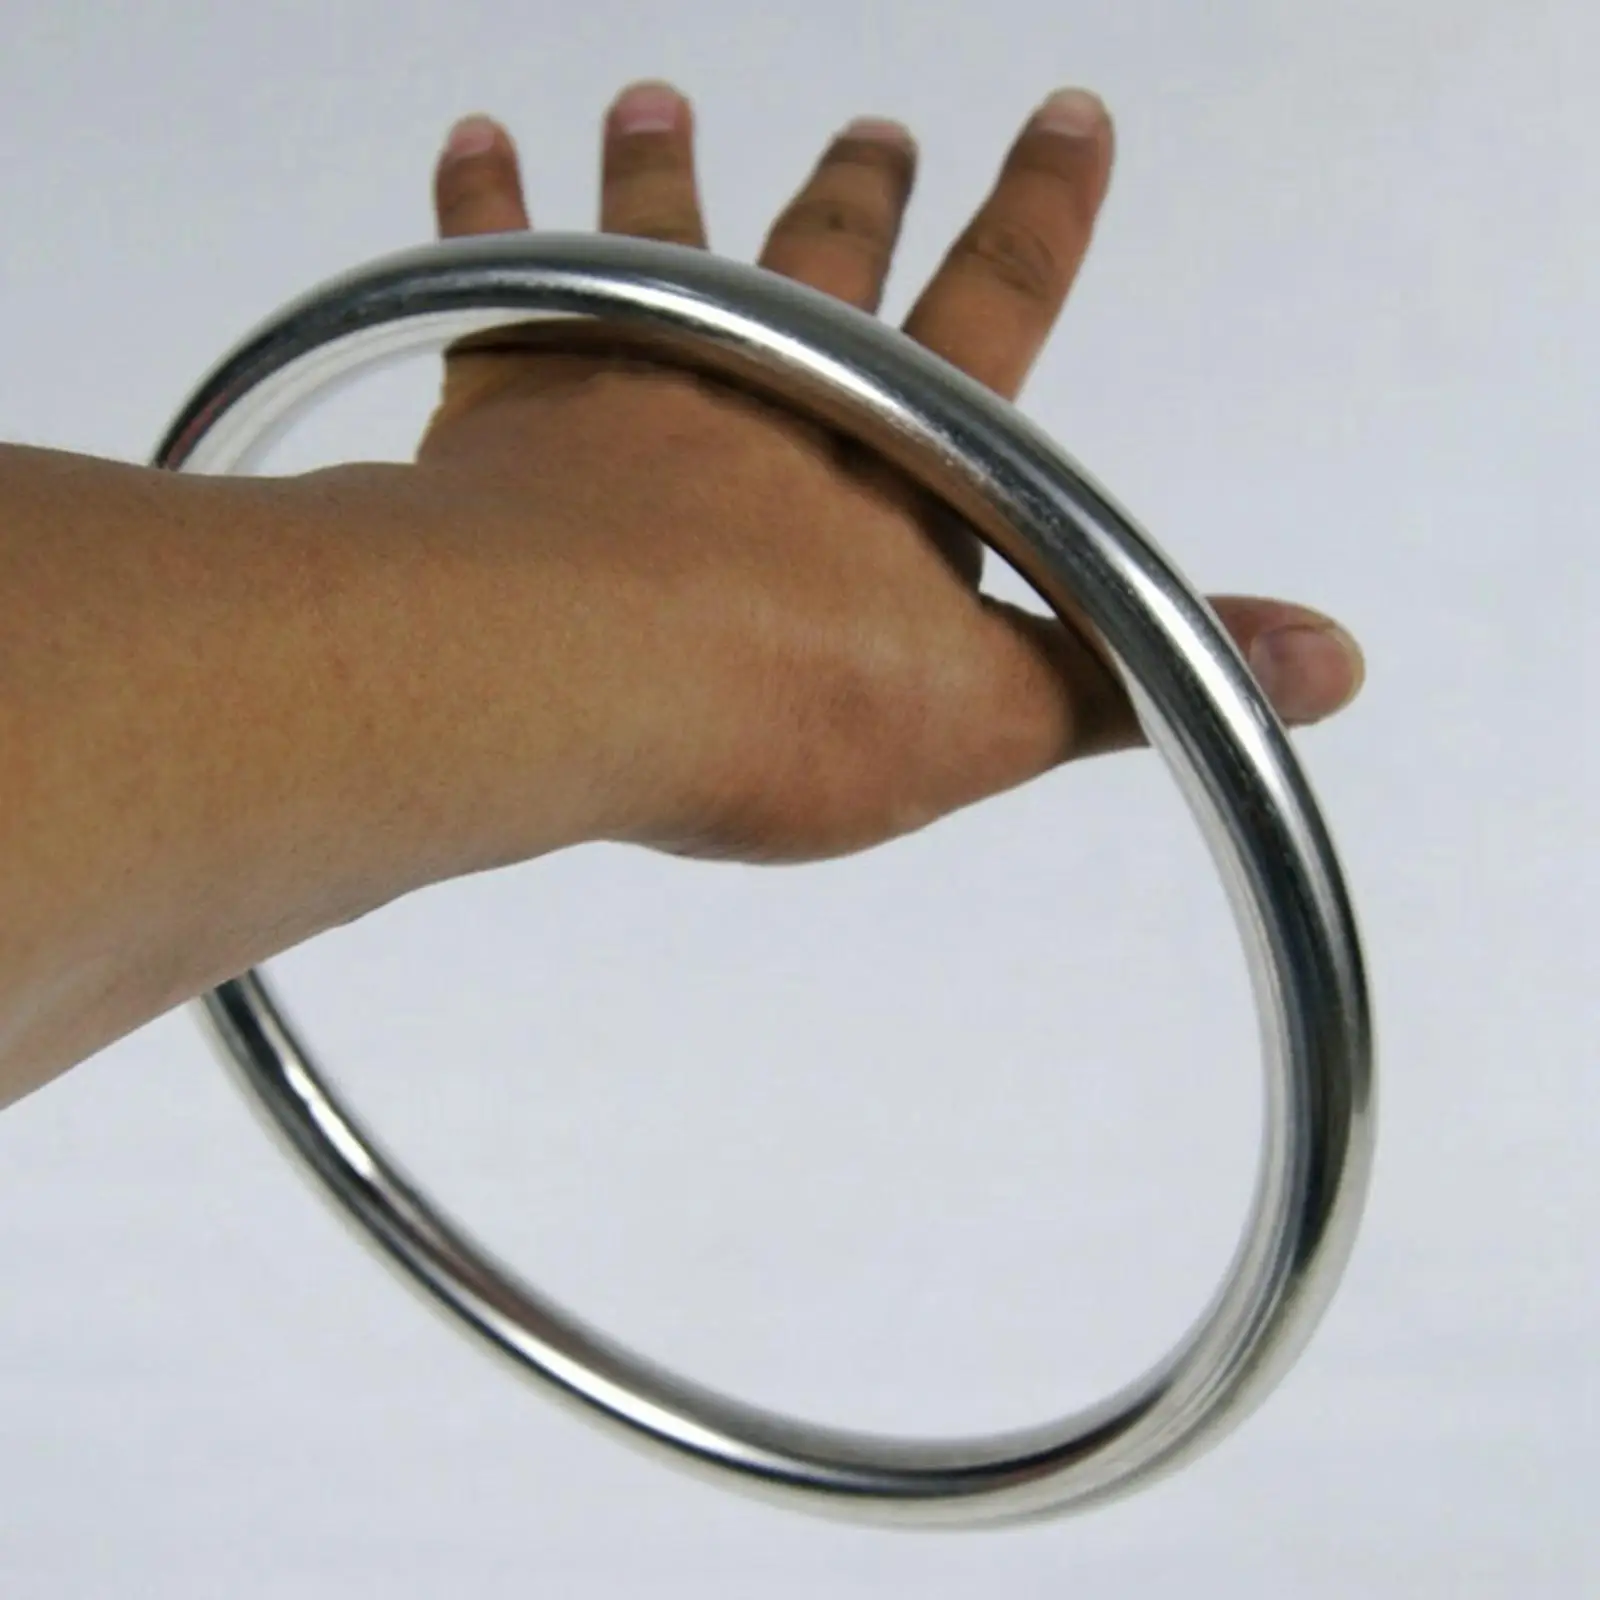 Stainless Steel Rattan Ring Durable Training Equipment Rings Sturdy Hoop